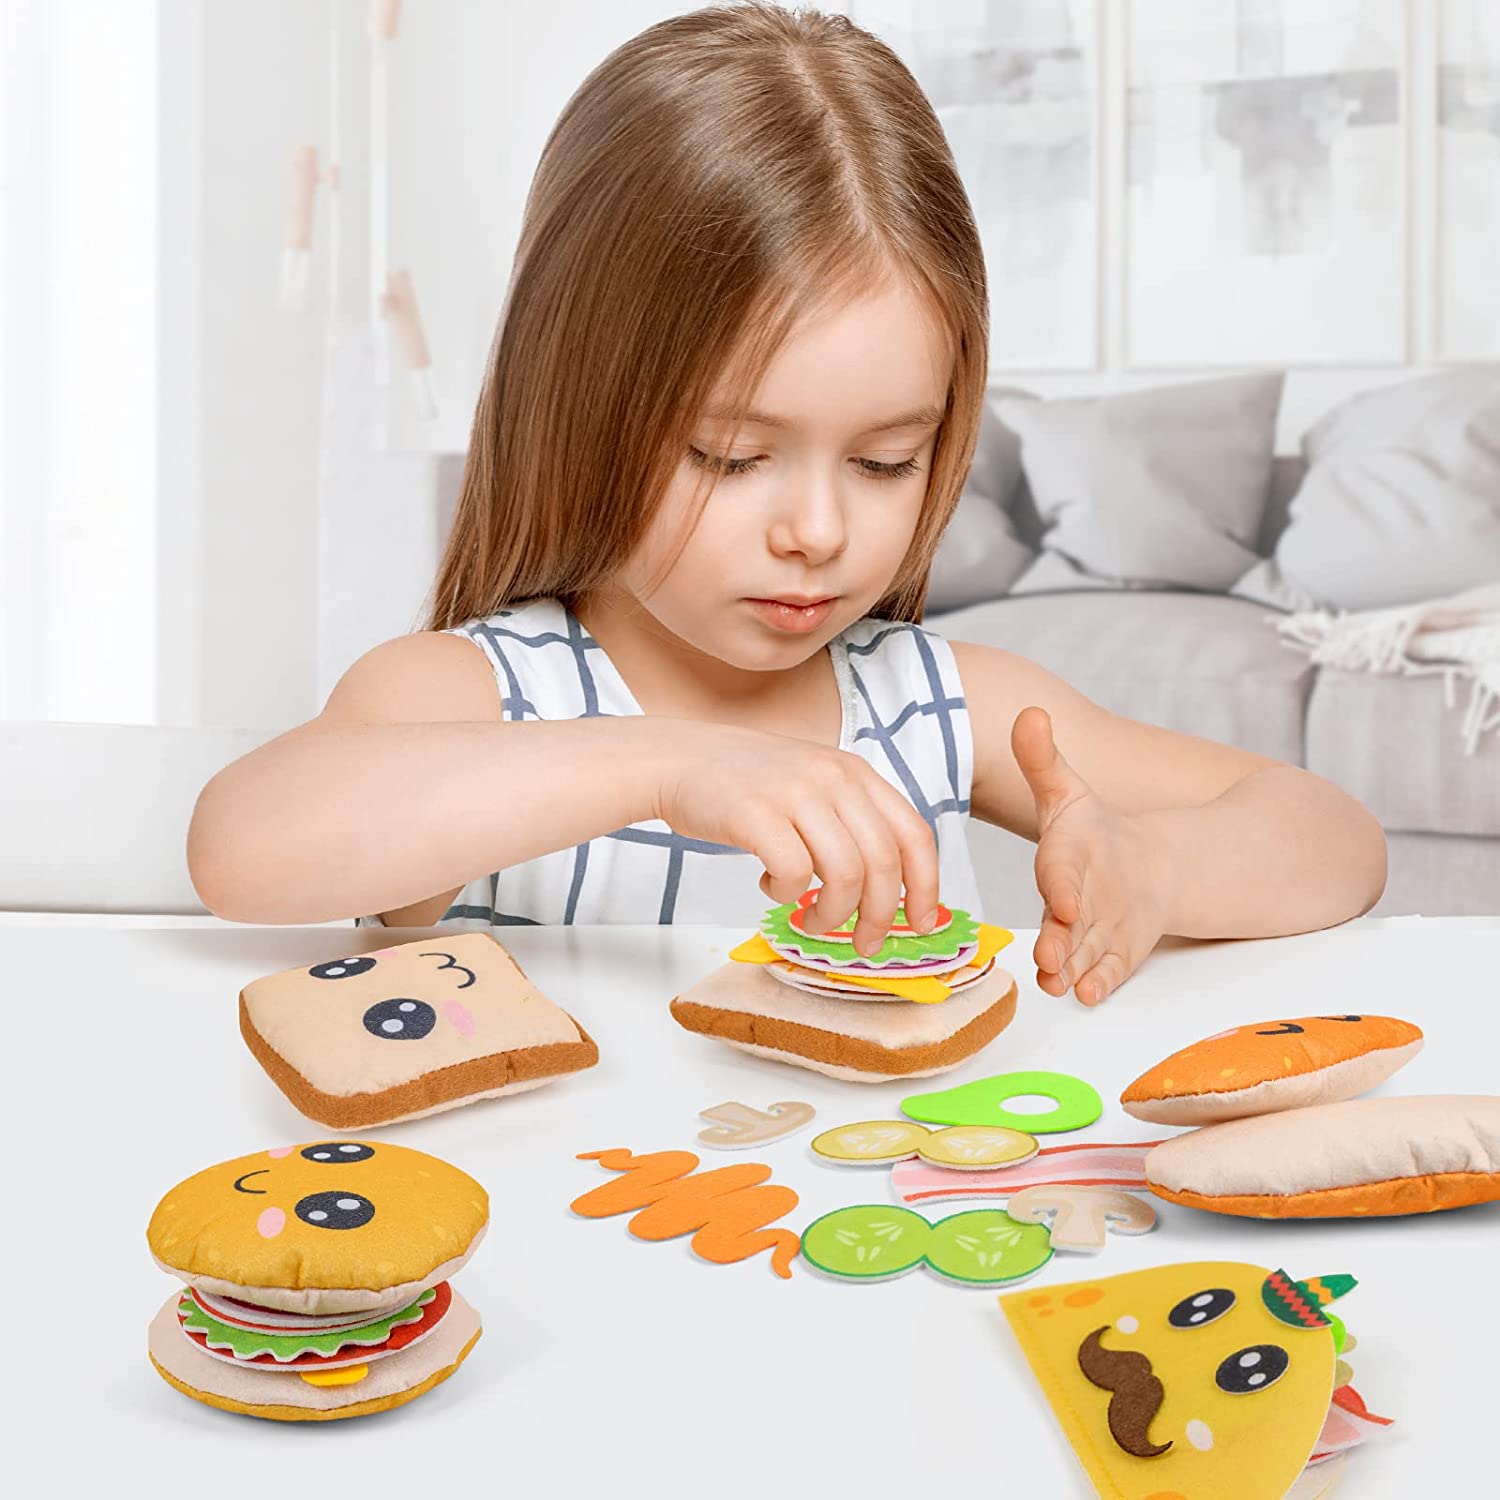 D-FantiX 34Pcs Play Food Sets for Kids Kitchen